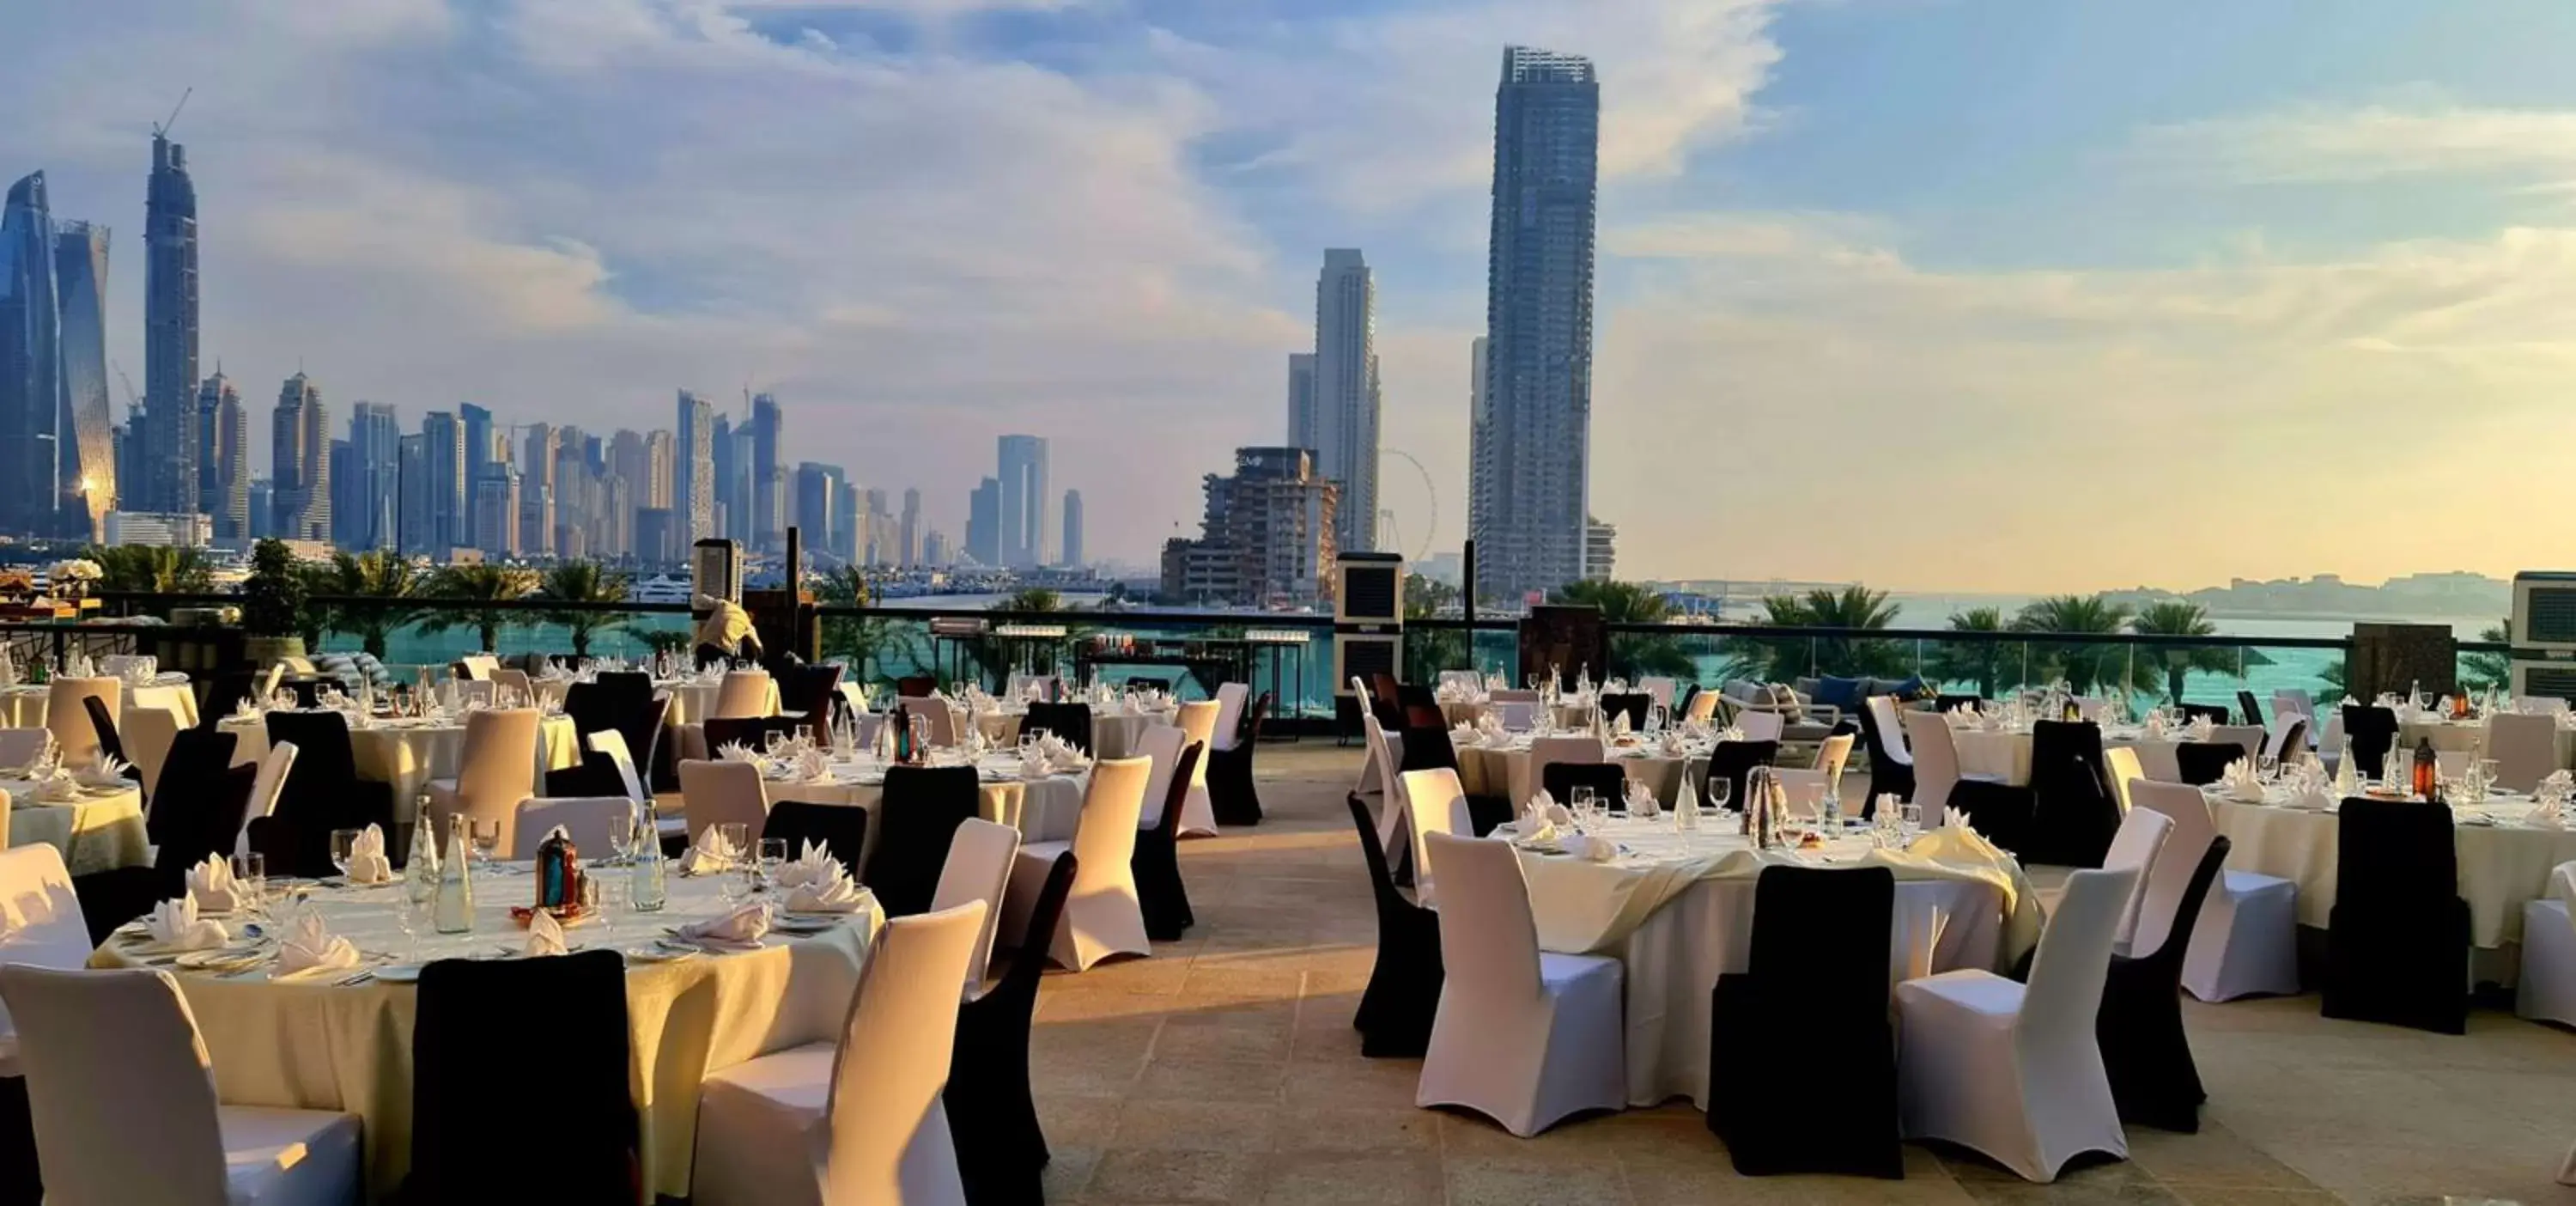 Meeting/conference room, Banquet Facilities in Hilton Dubai Palm Jumeirah